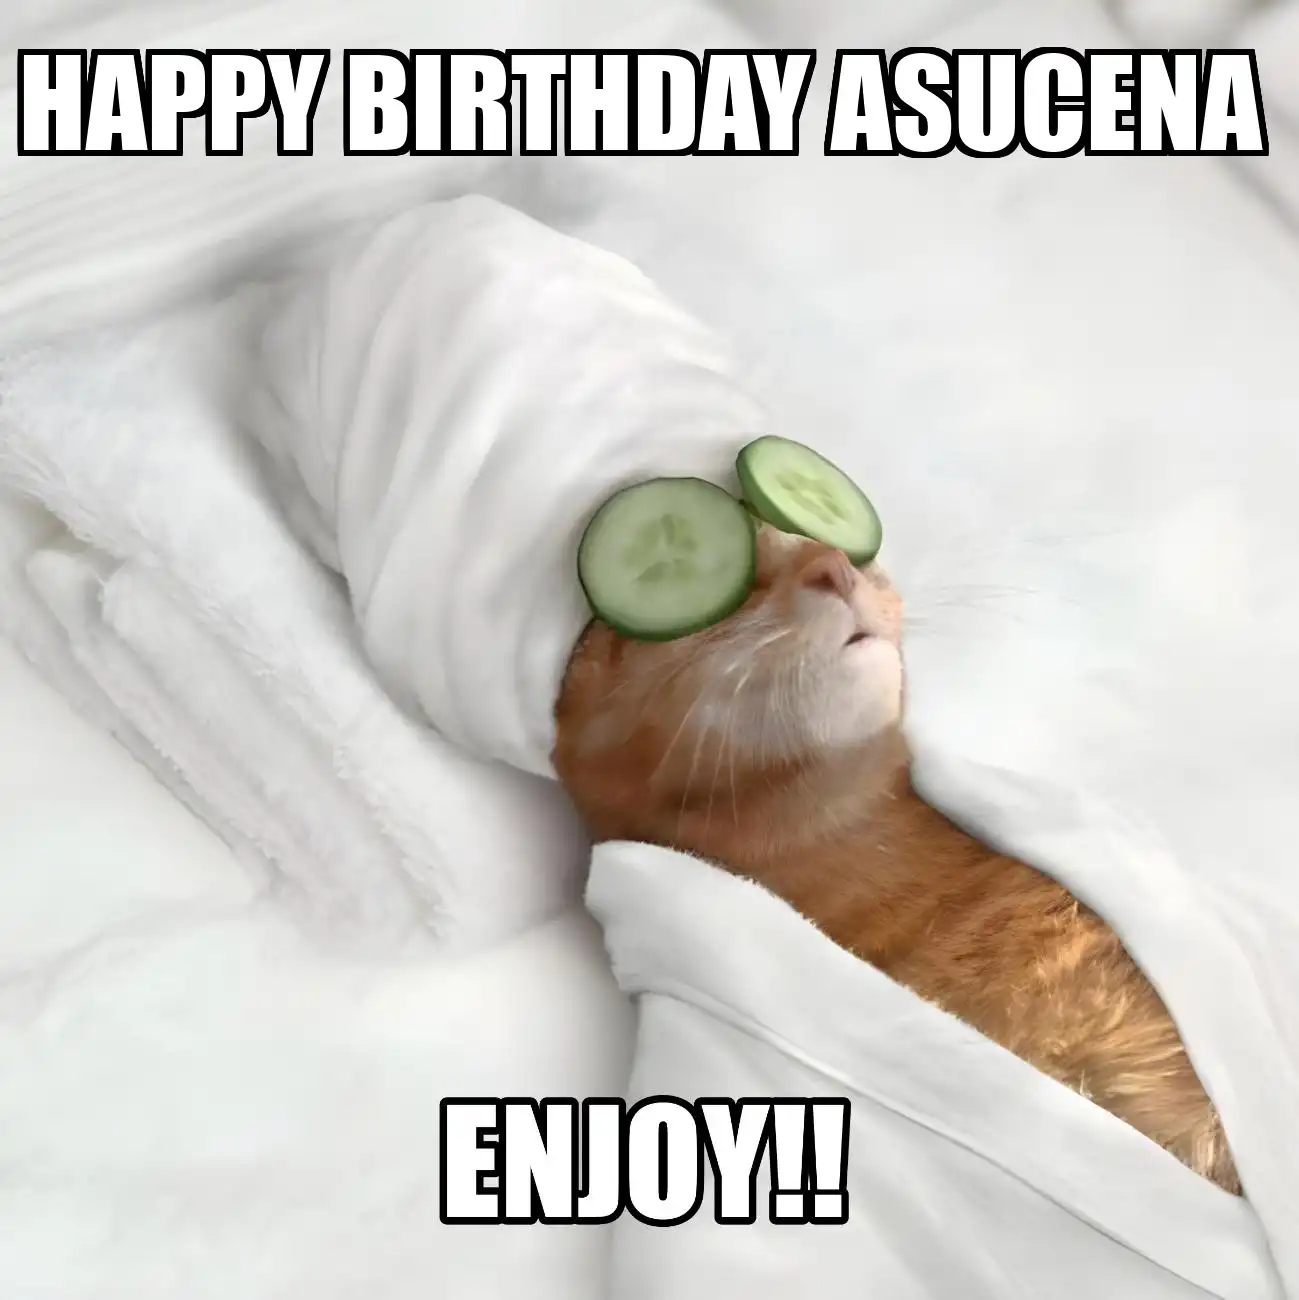 Happy Birthday Asucena Enjoy Cat Meme